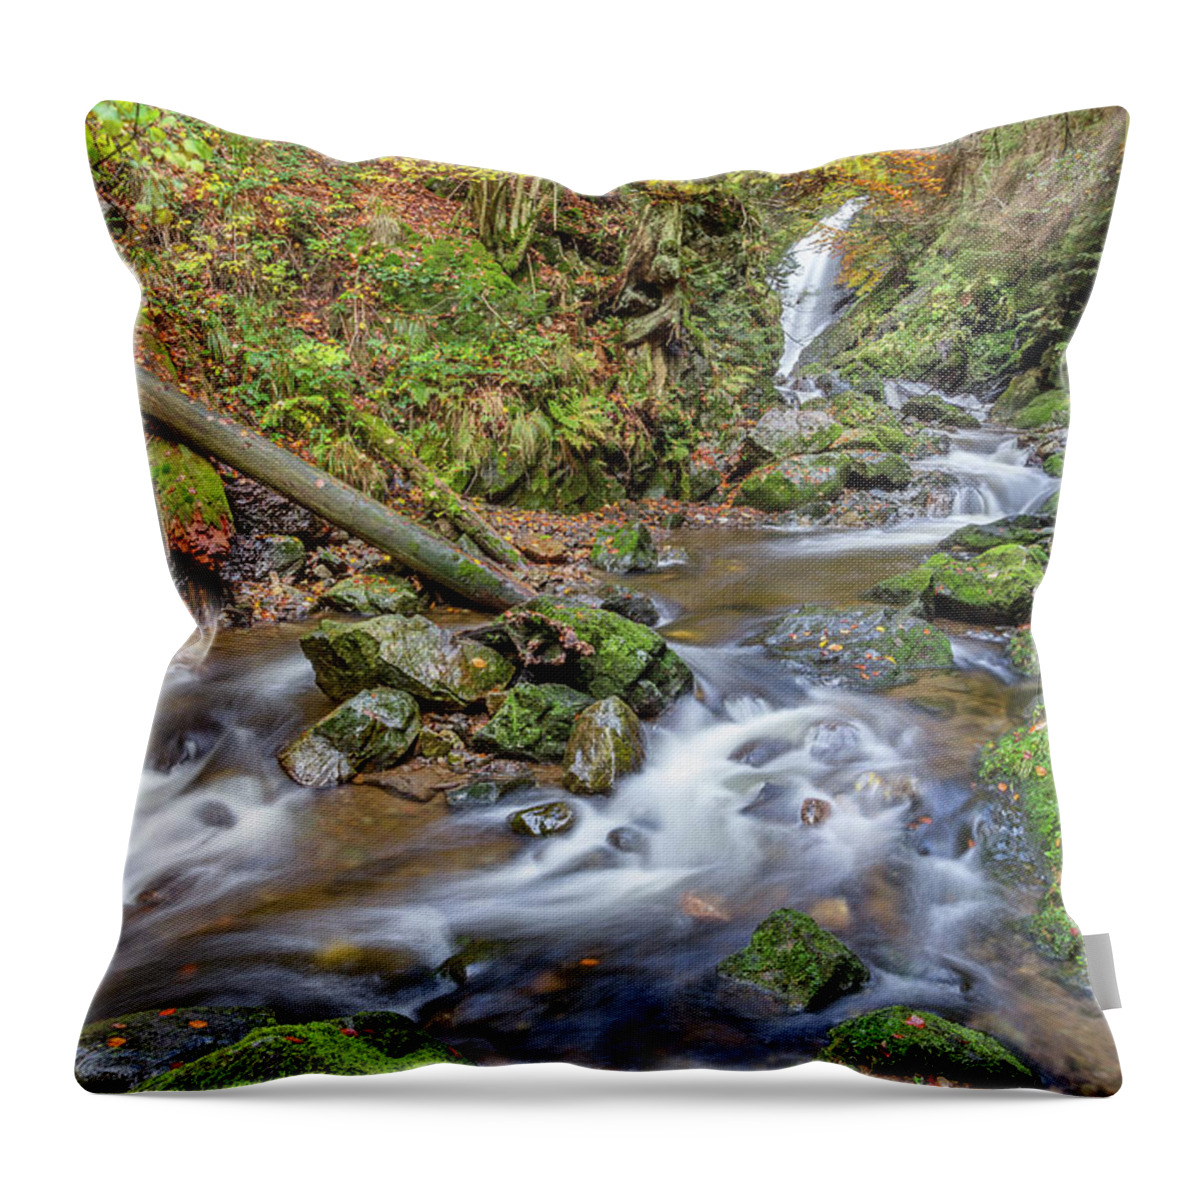 Ravenna-gorge Throw Pillow featuring the photograph Cascades And Waterfalls #6 by Bernd Laeschke